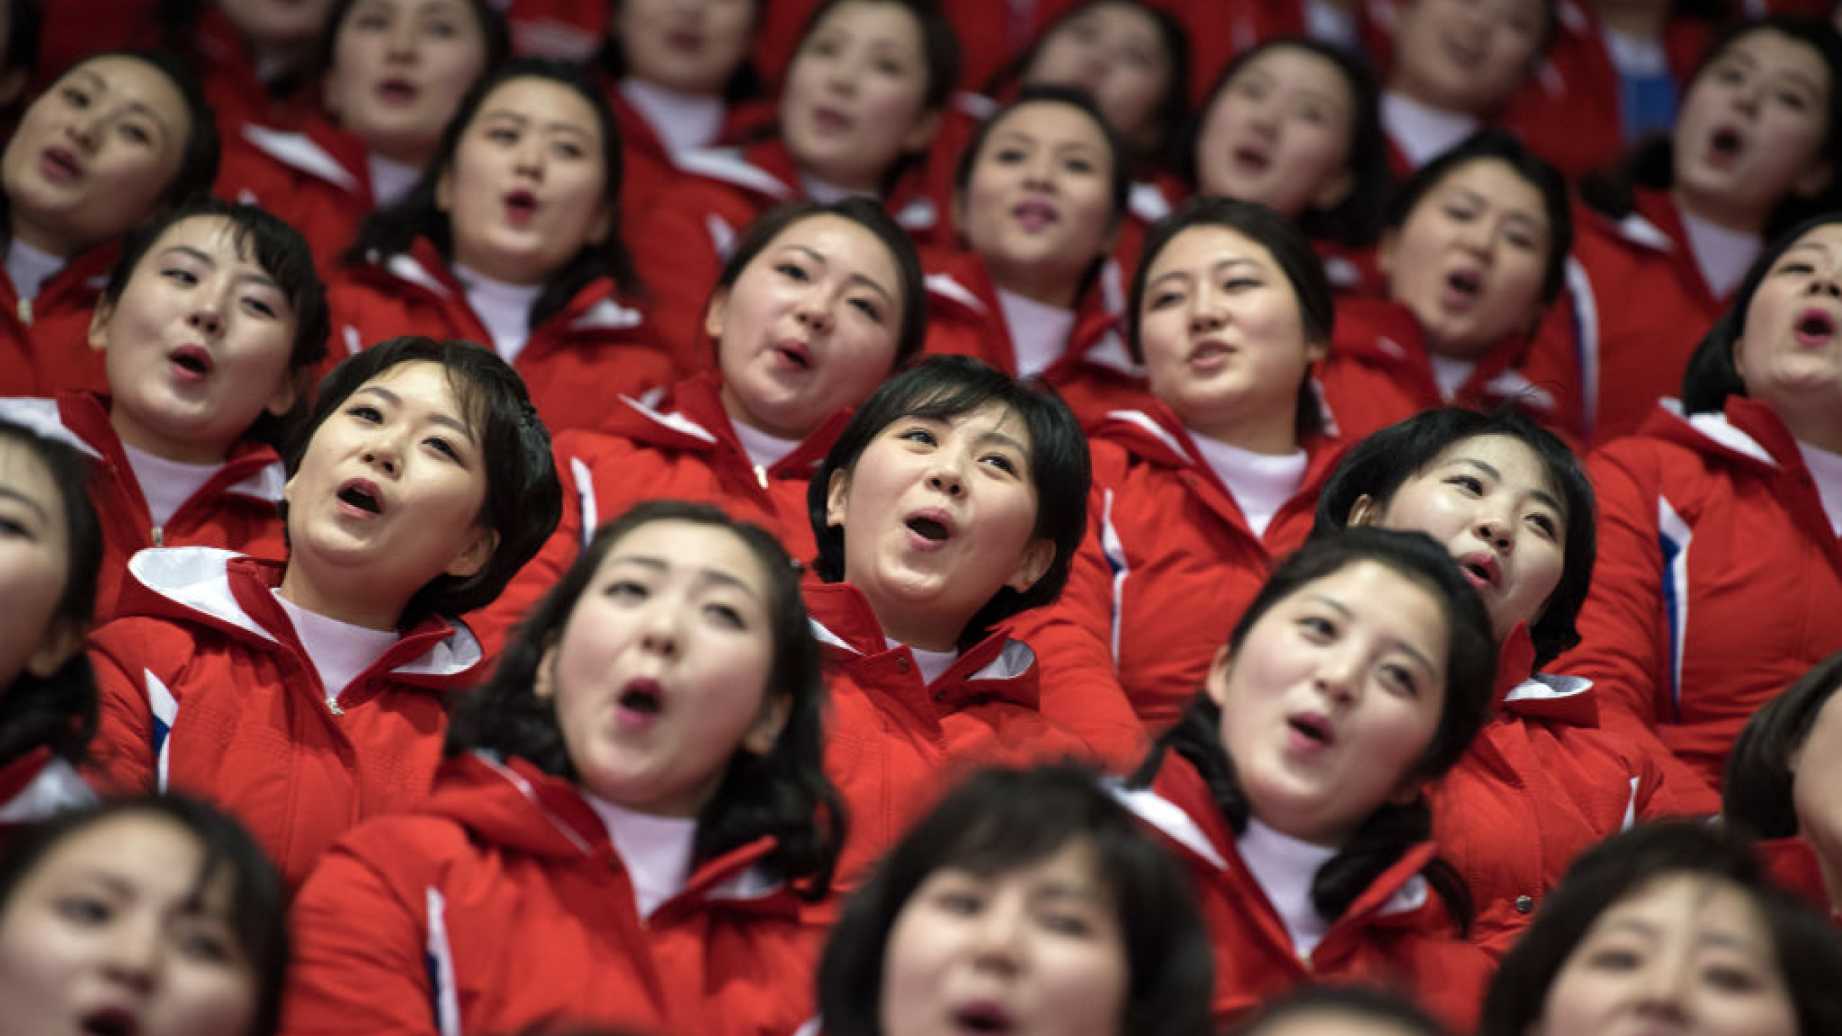 A Korean Cheerleader Popular For Resembling Red